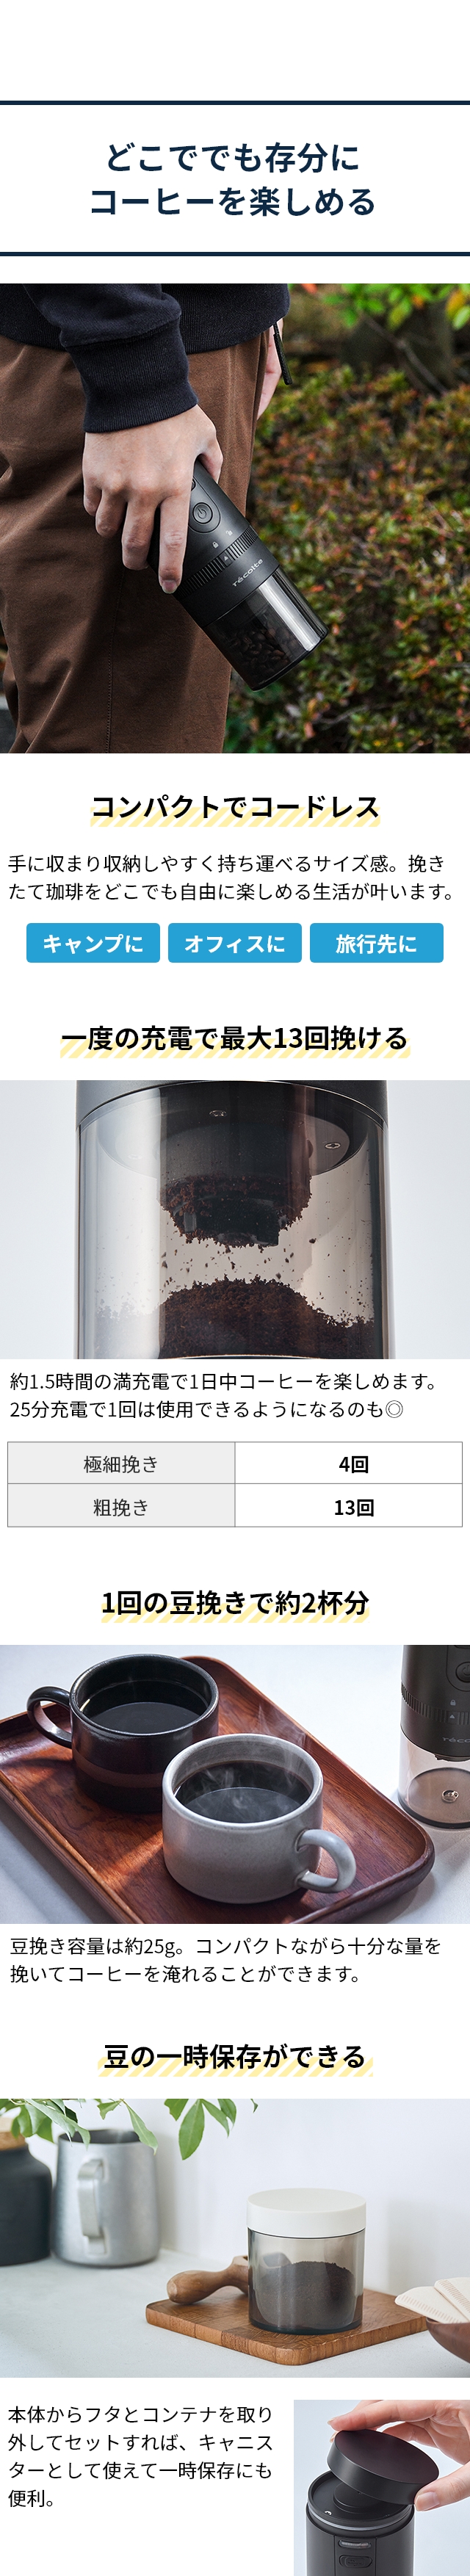 recolte（レコルト） コードレス コーヒーグラインダー(Cordless Coffee Grinder) RCM-3